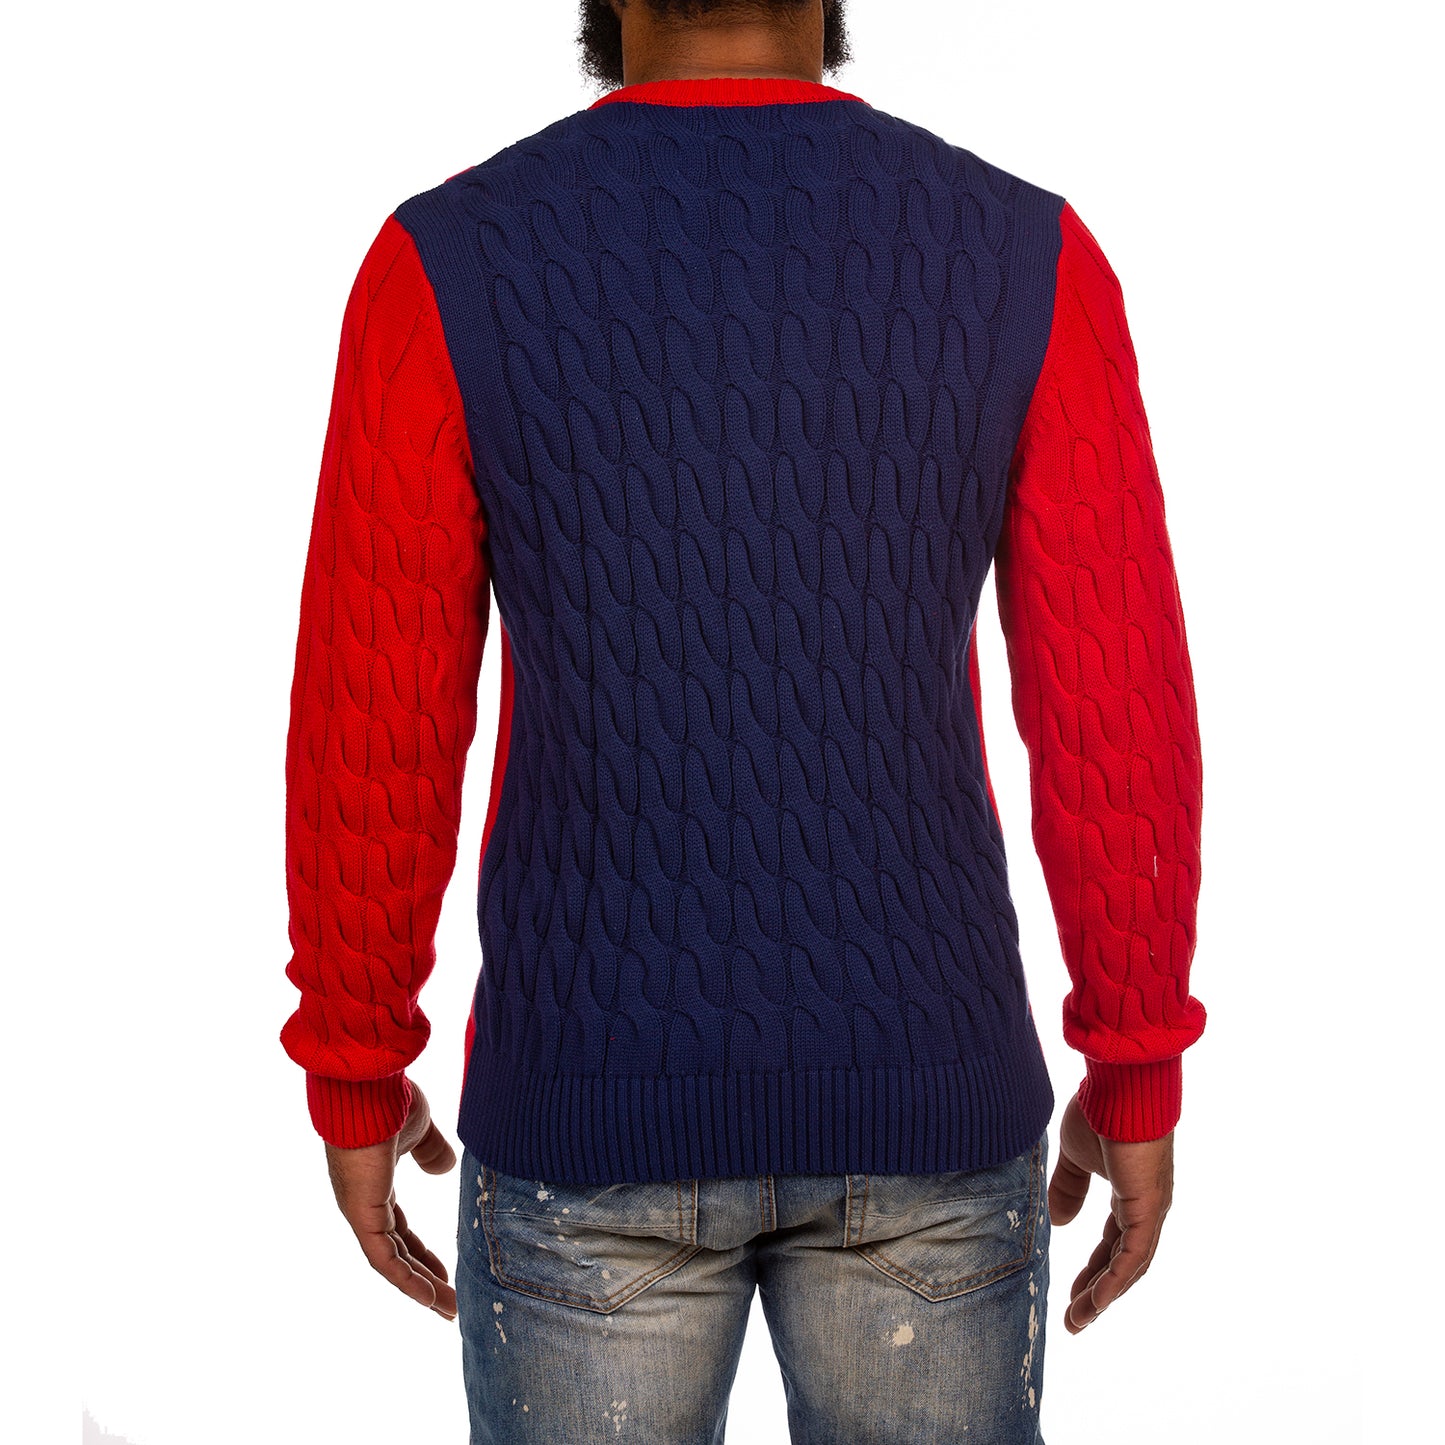 Slick Bundled Sweater (Red)